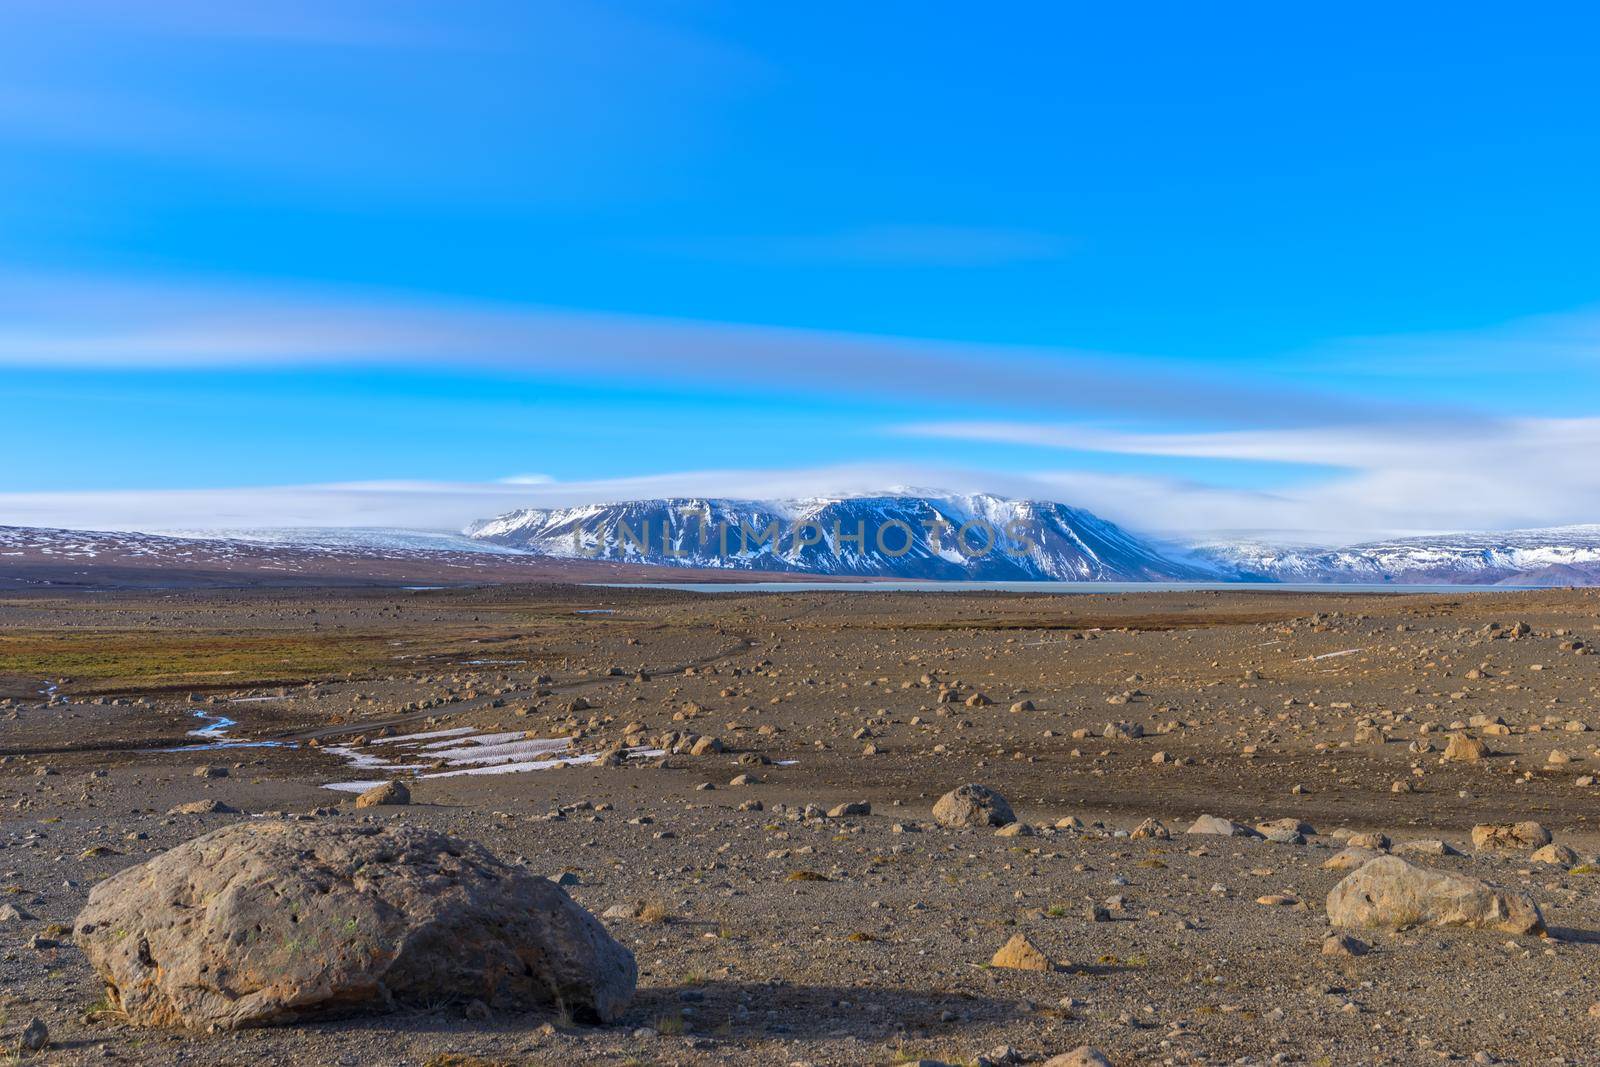 Mars terrain in Icelandic highlands, long exposure by FerradalFCG